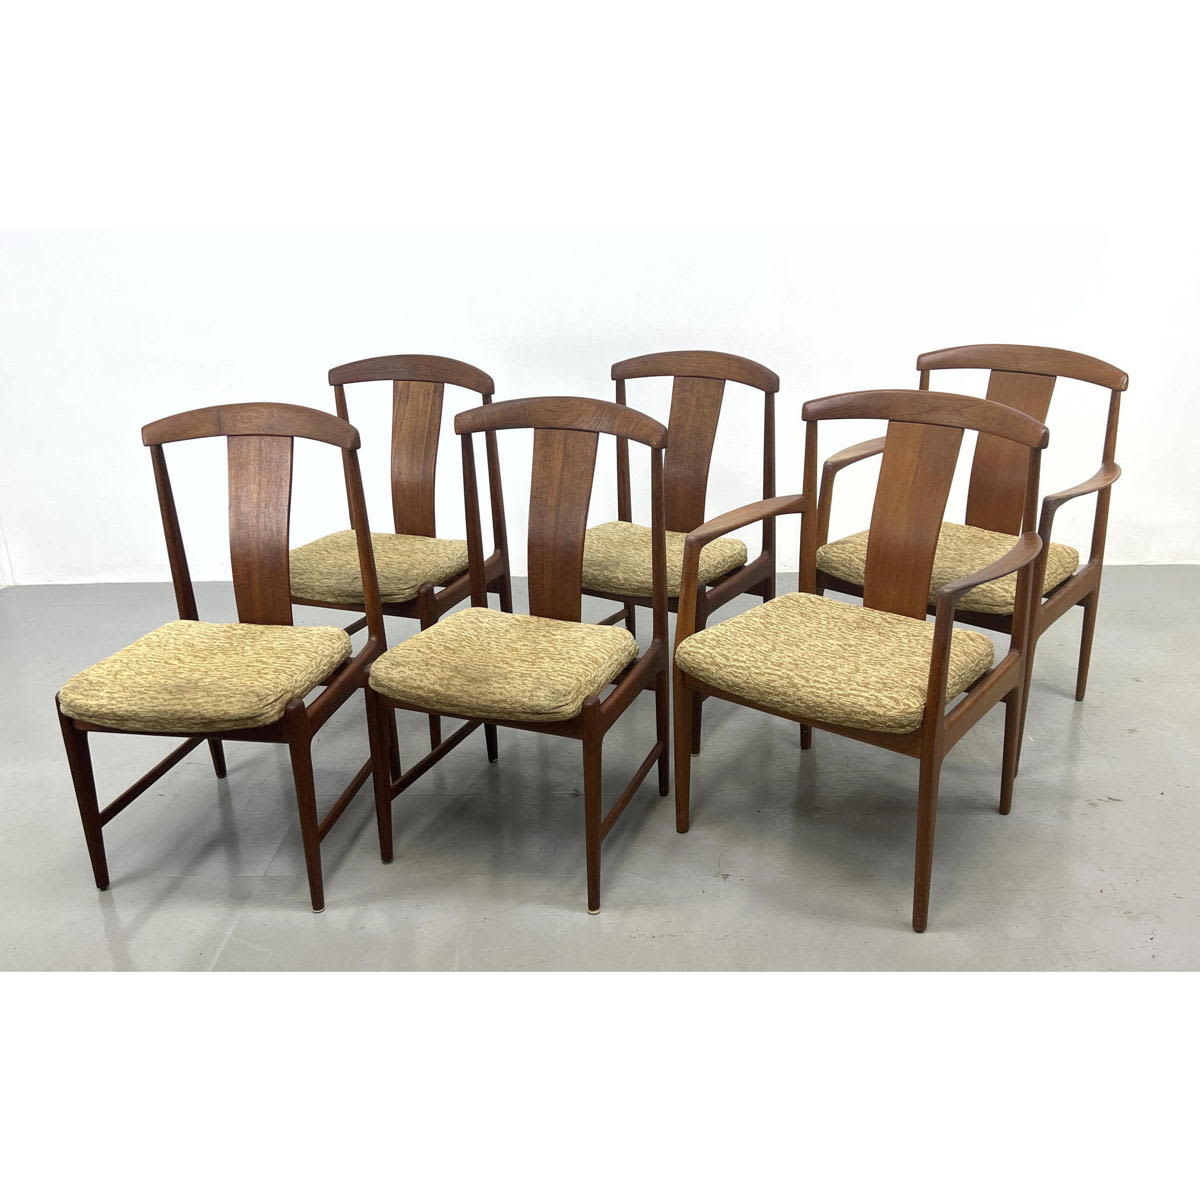 Set 6 Danish Modern Dining Chairs  2b8415